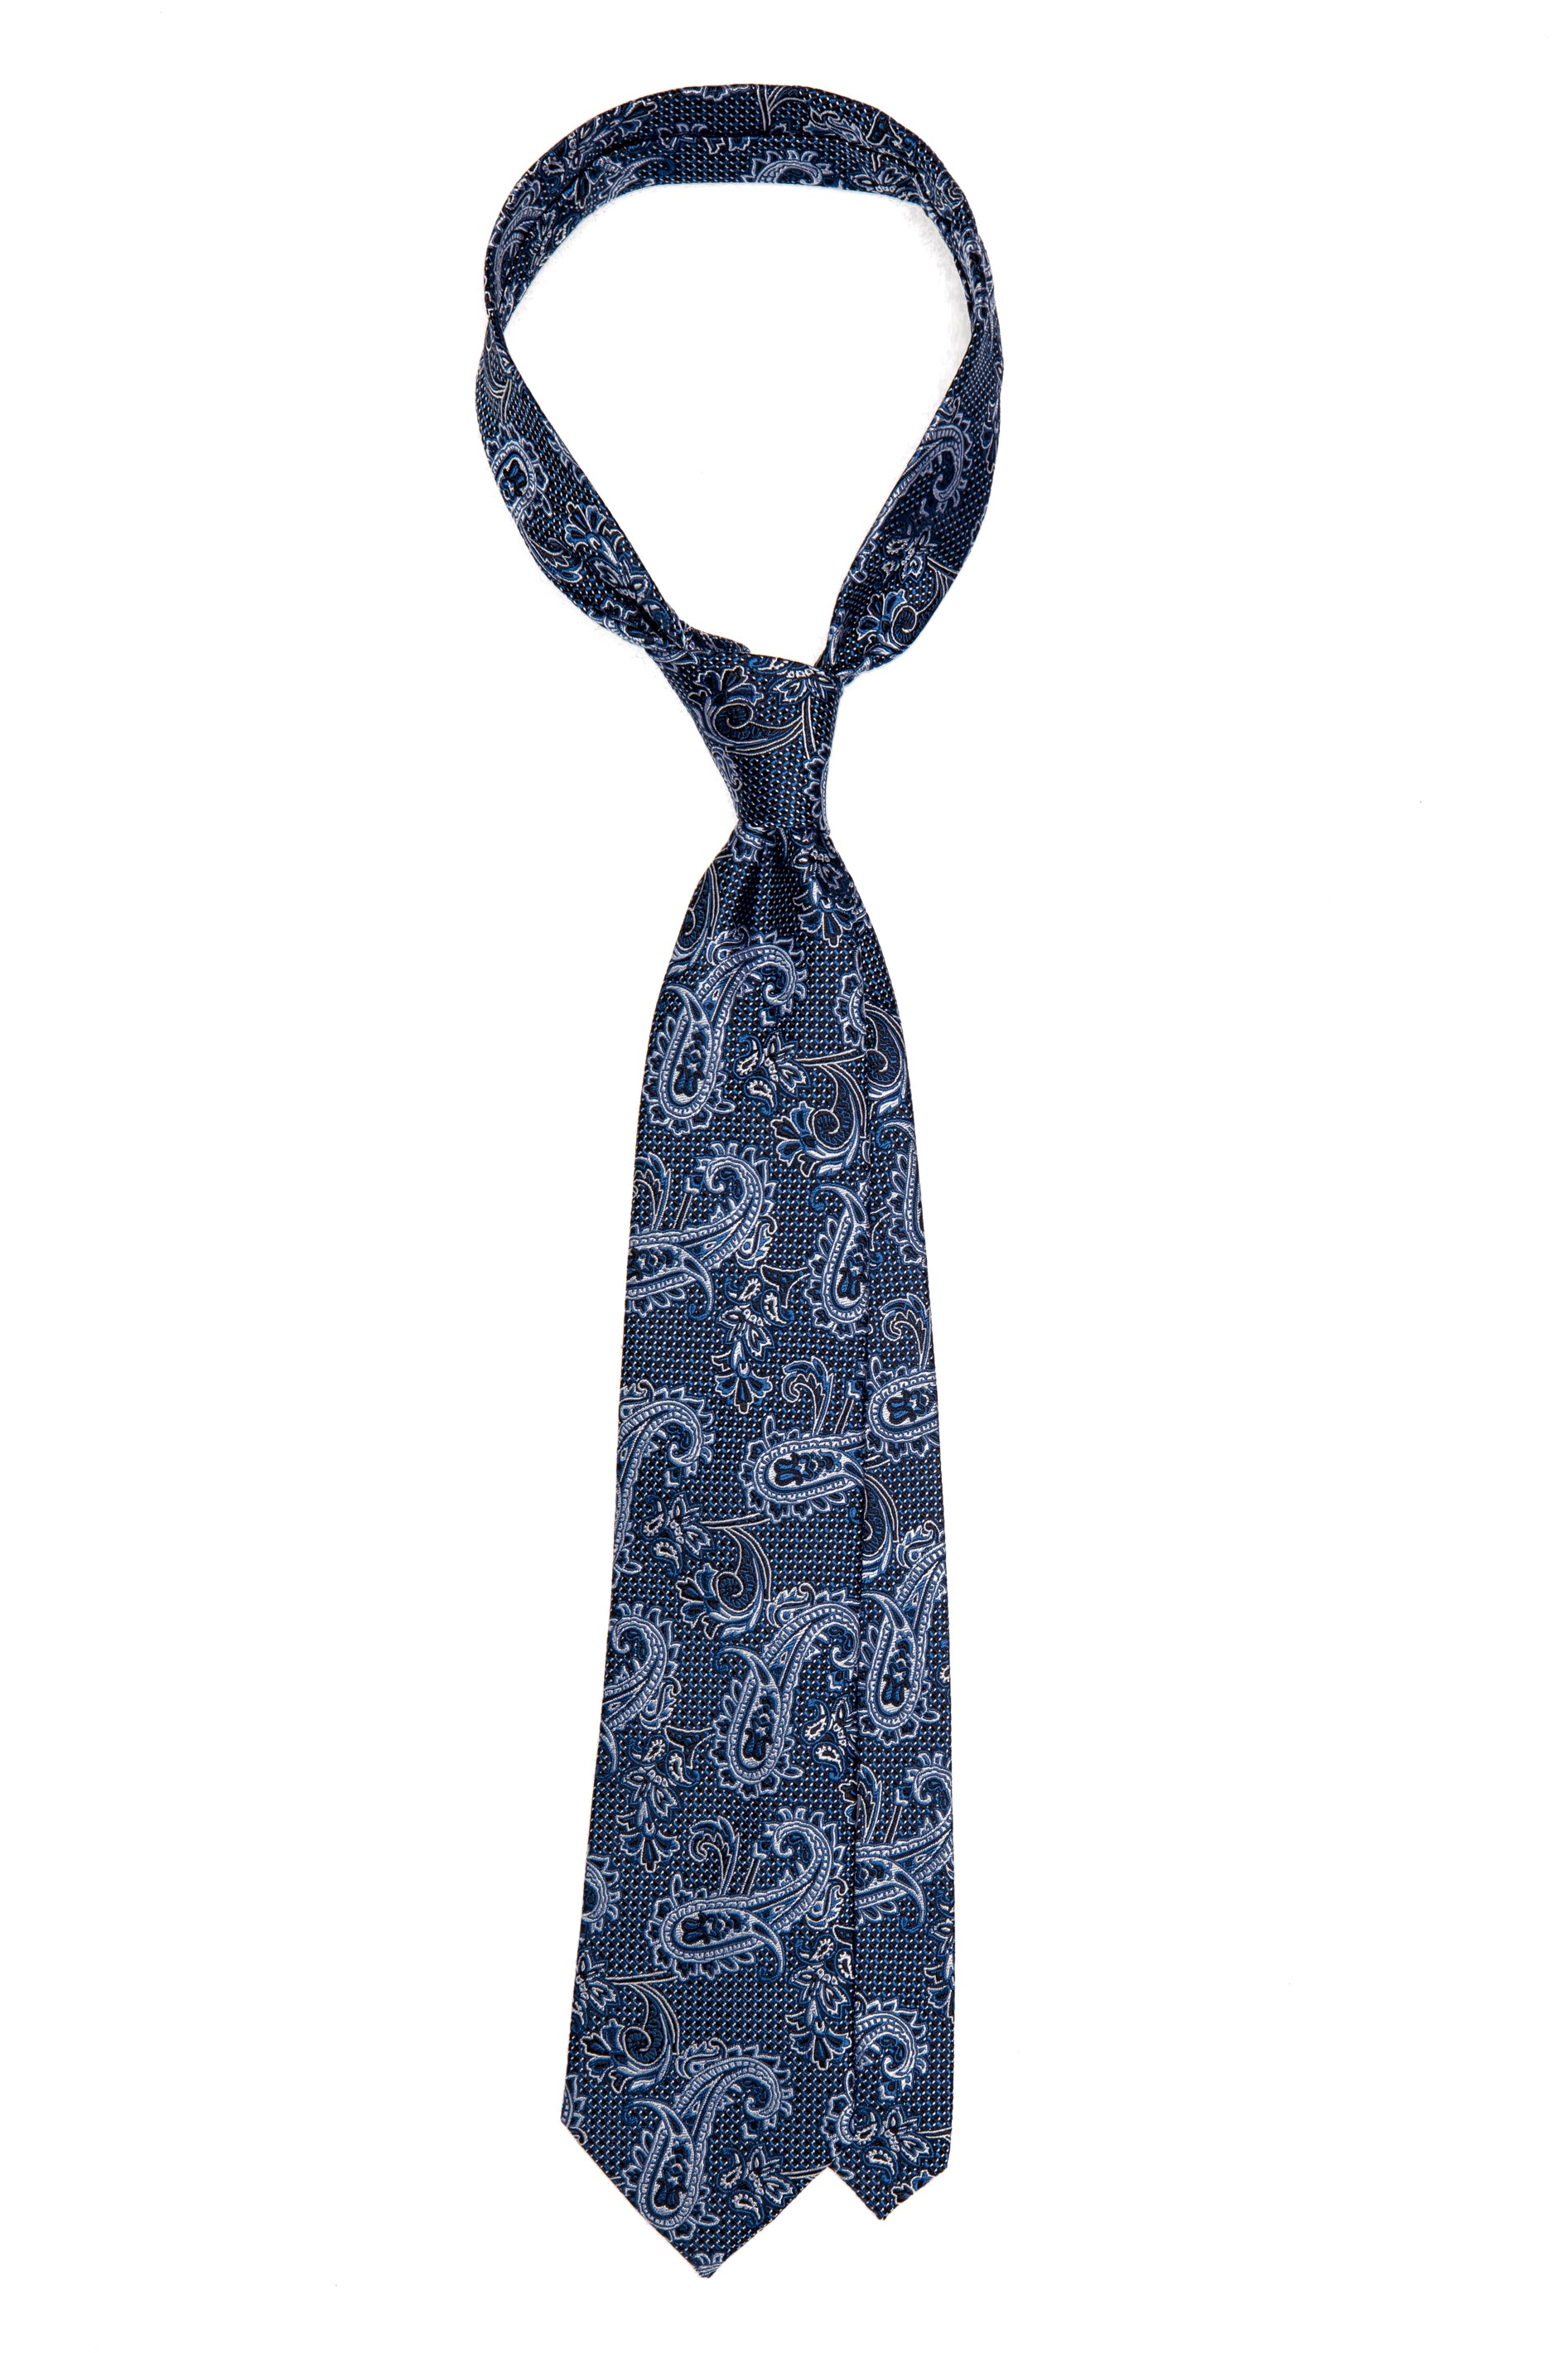 Cravatta in seta blu paisley